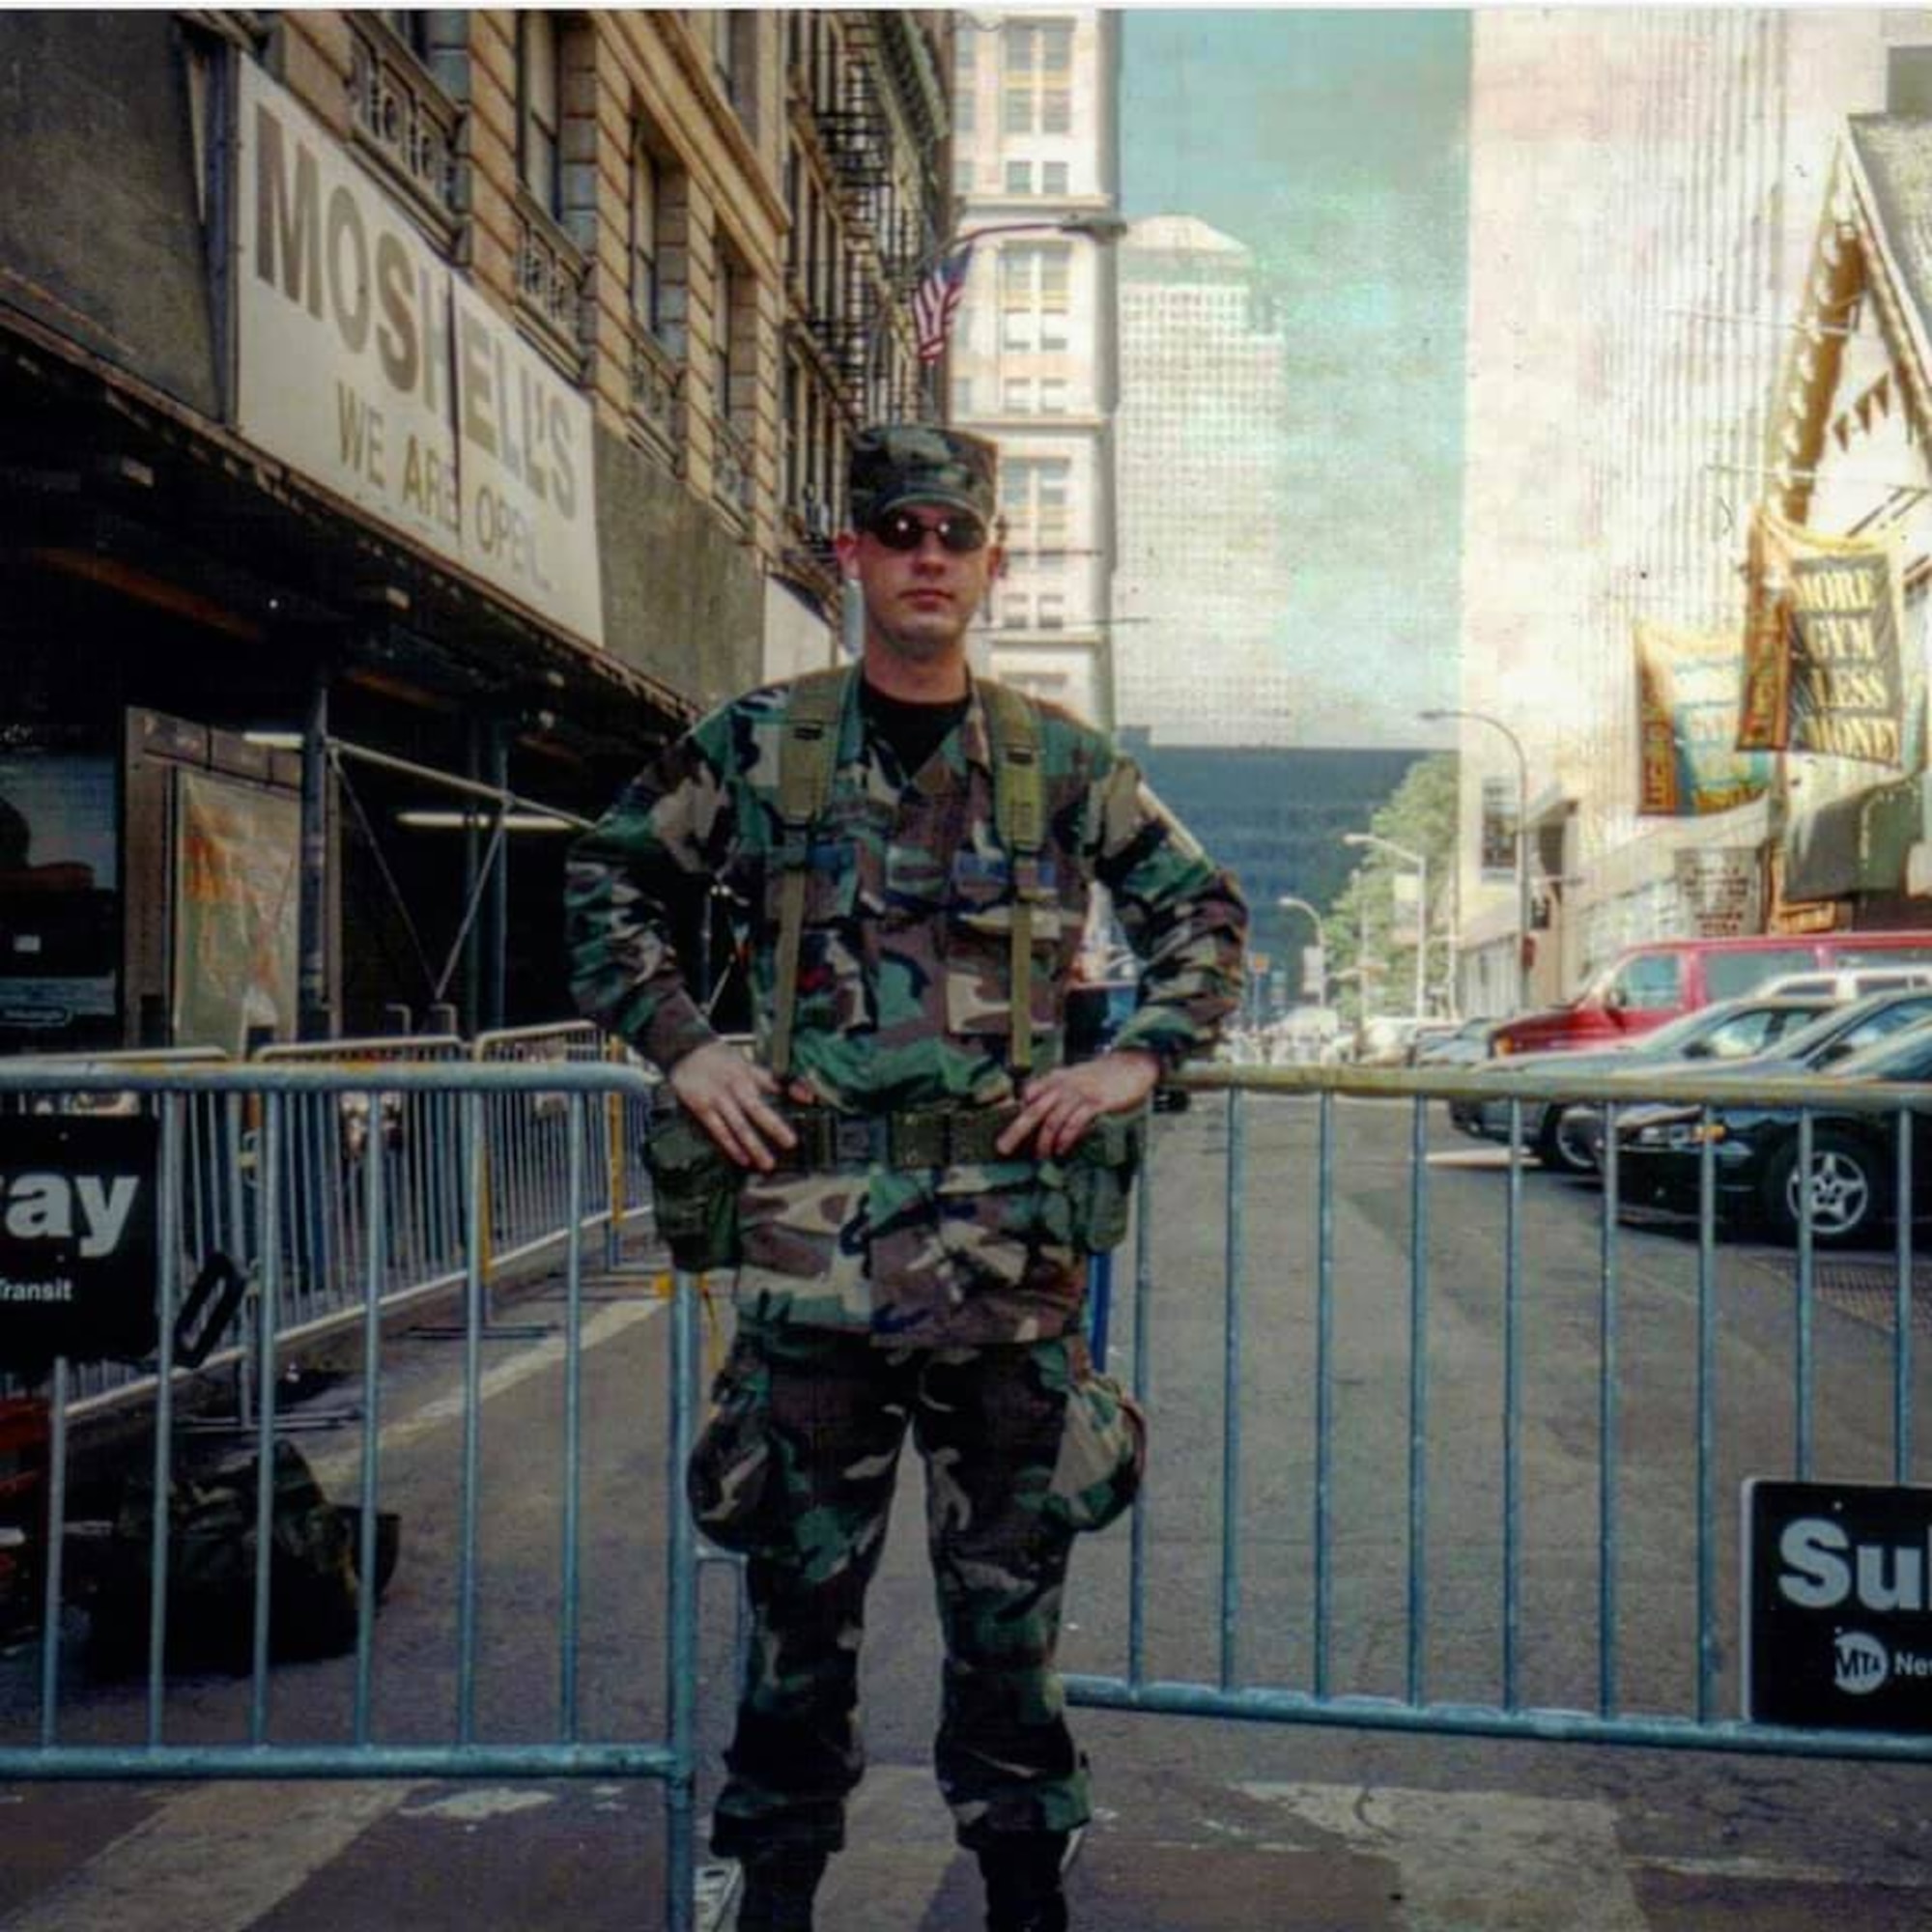 Then Senior Airman Tim Russer guards Ground Zero in New York City on September 11, 2001.